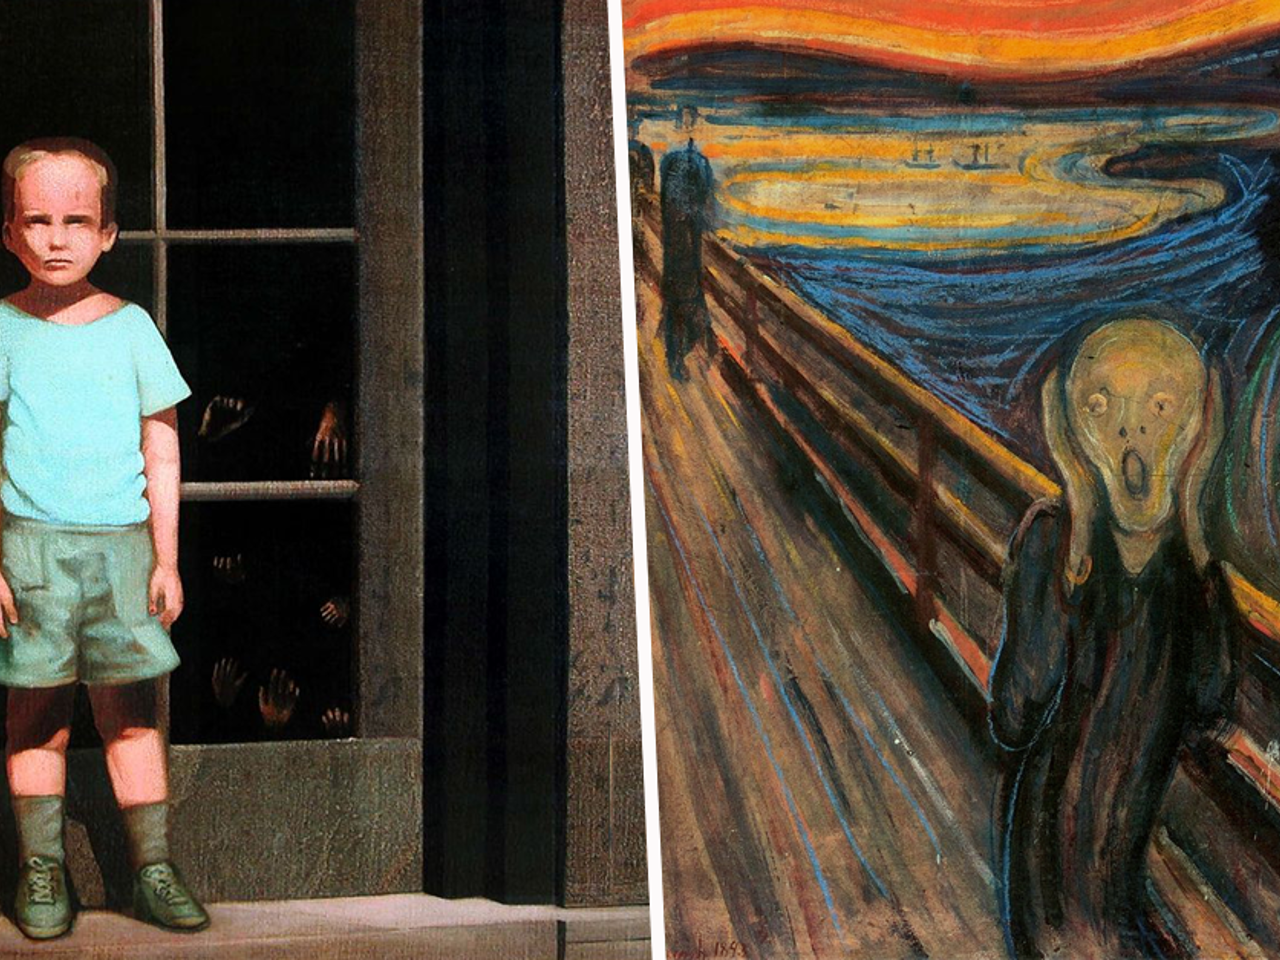 Картина мальчик и кукла у стеклянной двери. Проклятые картины Билл Стоунхэм. Художник Билл Стоунхэм. Билл Стоунхэм руки противятся. Проклятая картина Билла Стоунхэма.